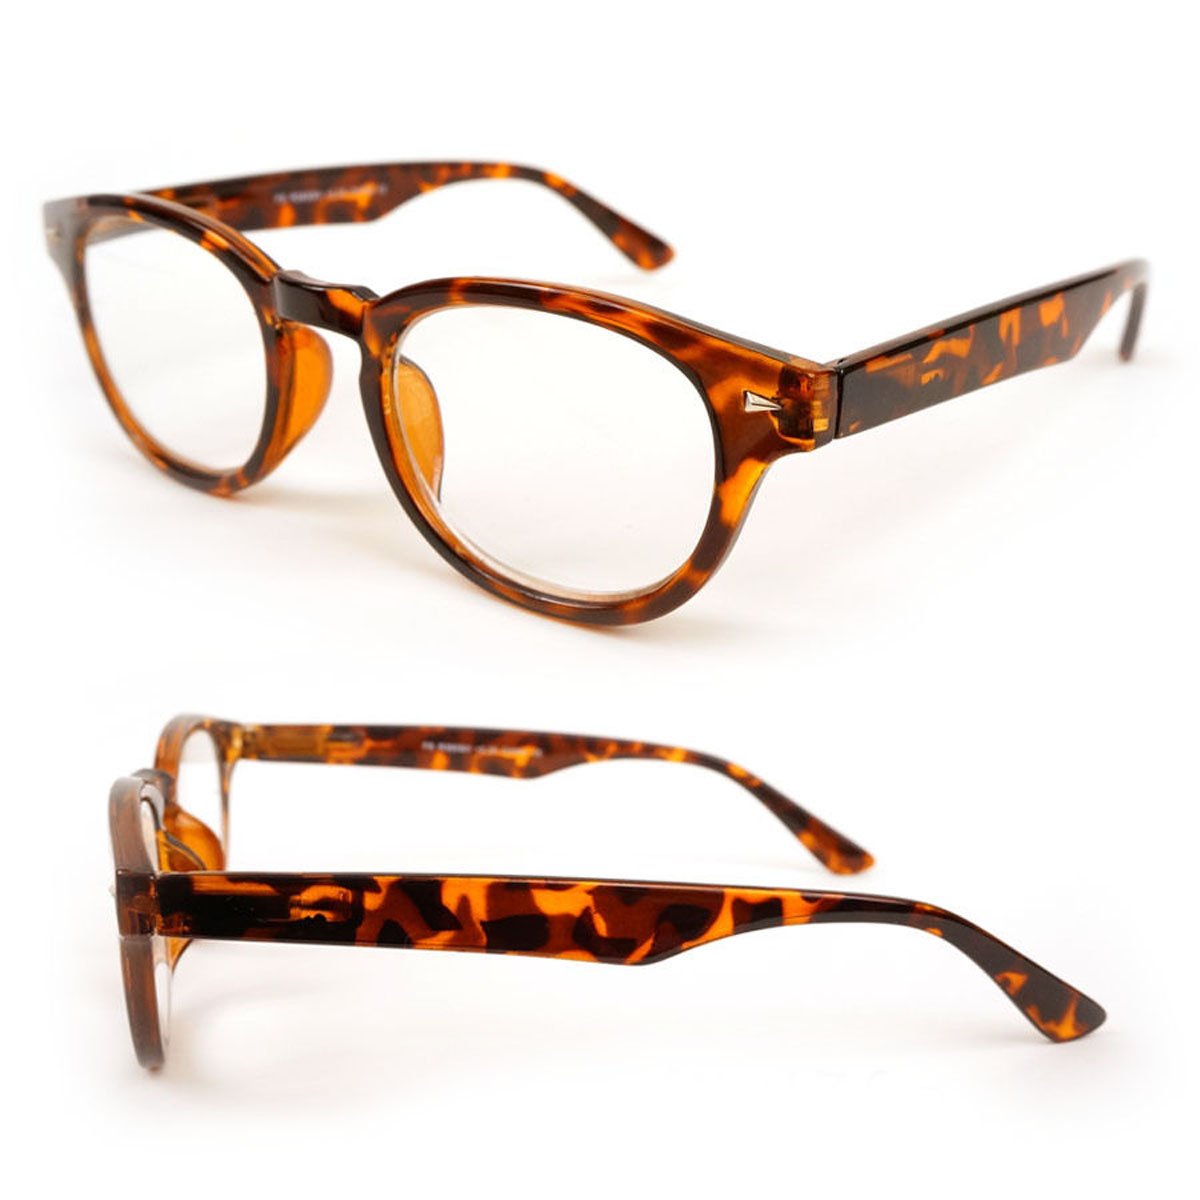 Medium Round Classic Frame Reading Glasses Geek Retro Vintage Style 100-375 - Brown, +3.25